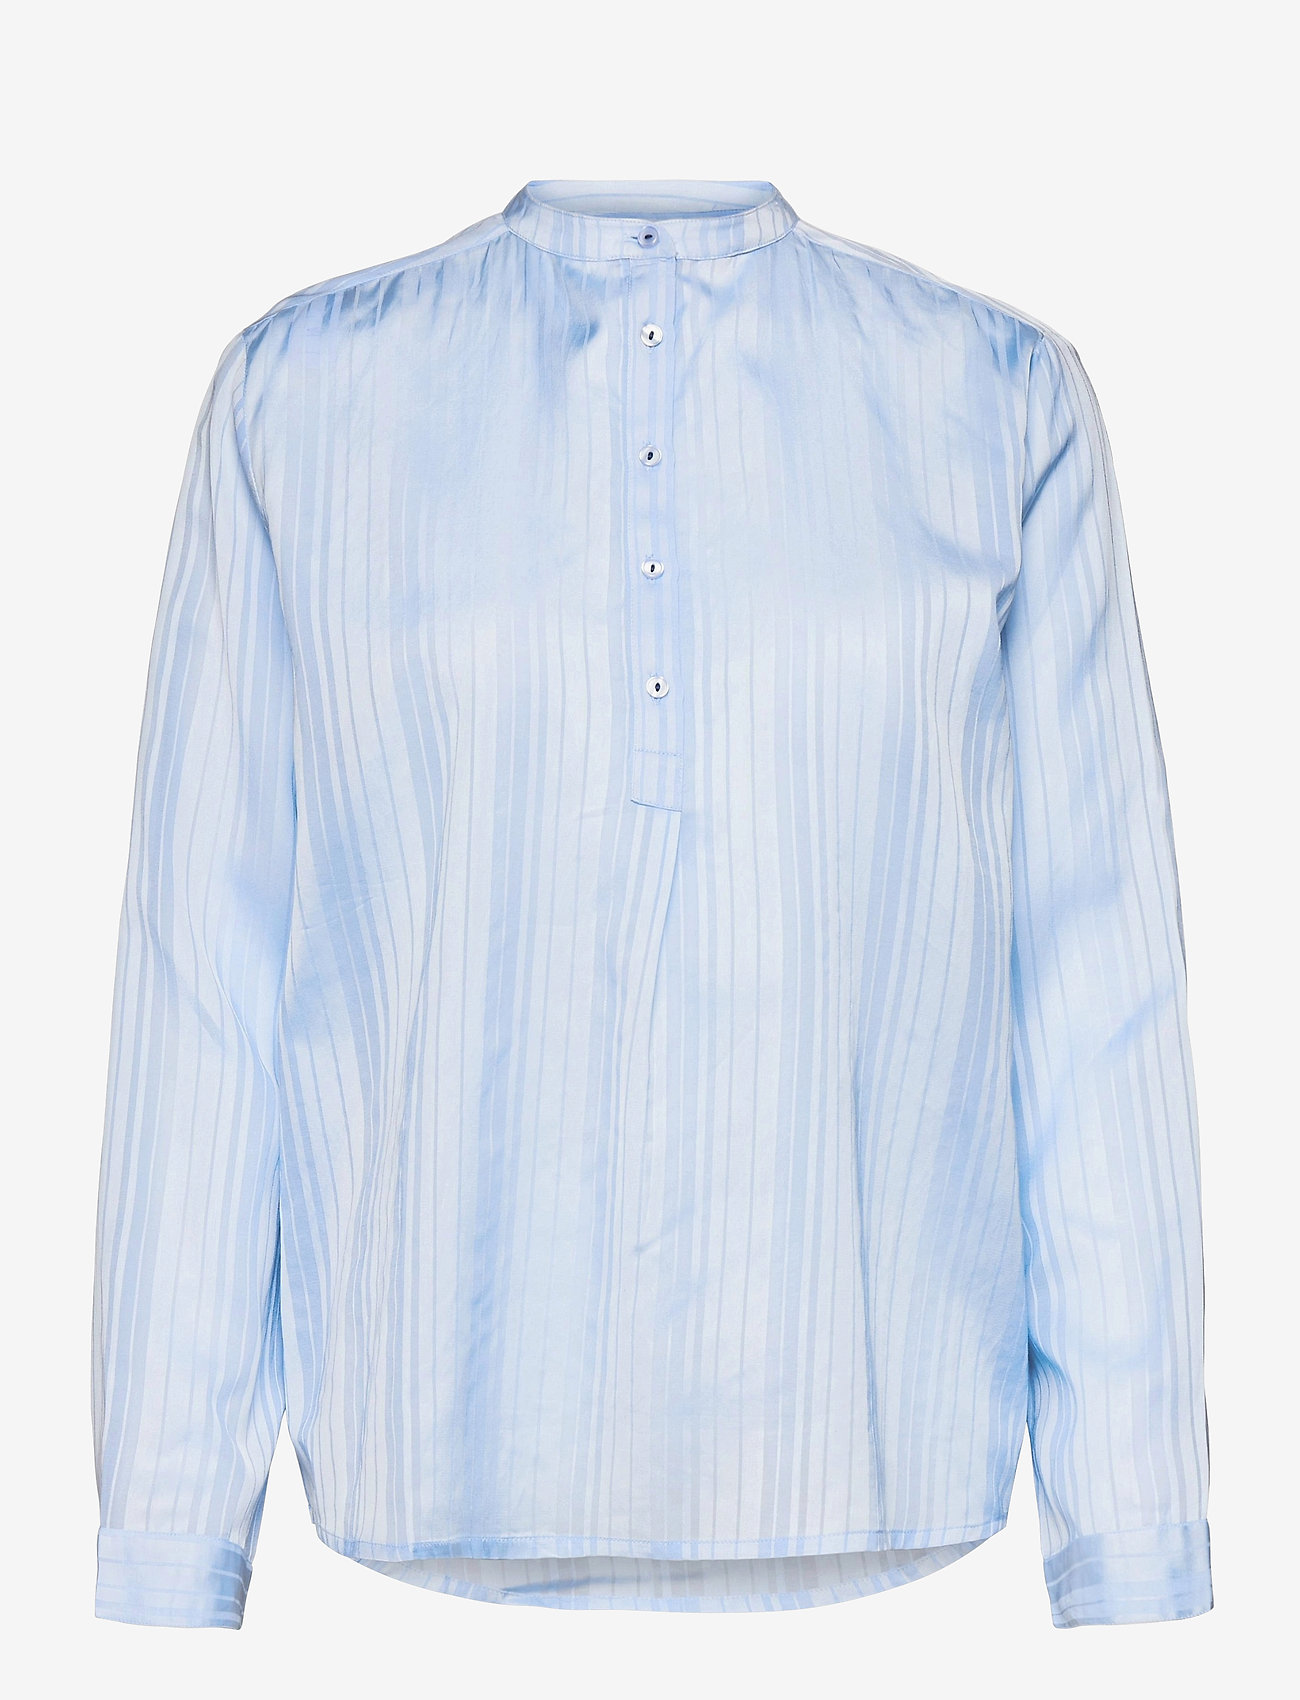 Lollys Laundry - Lux Shirt - långärmade blusar - light blue - 0